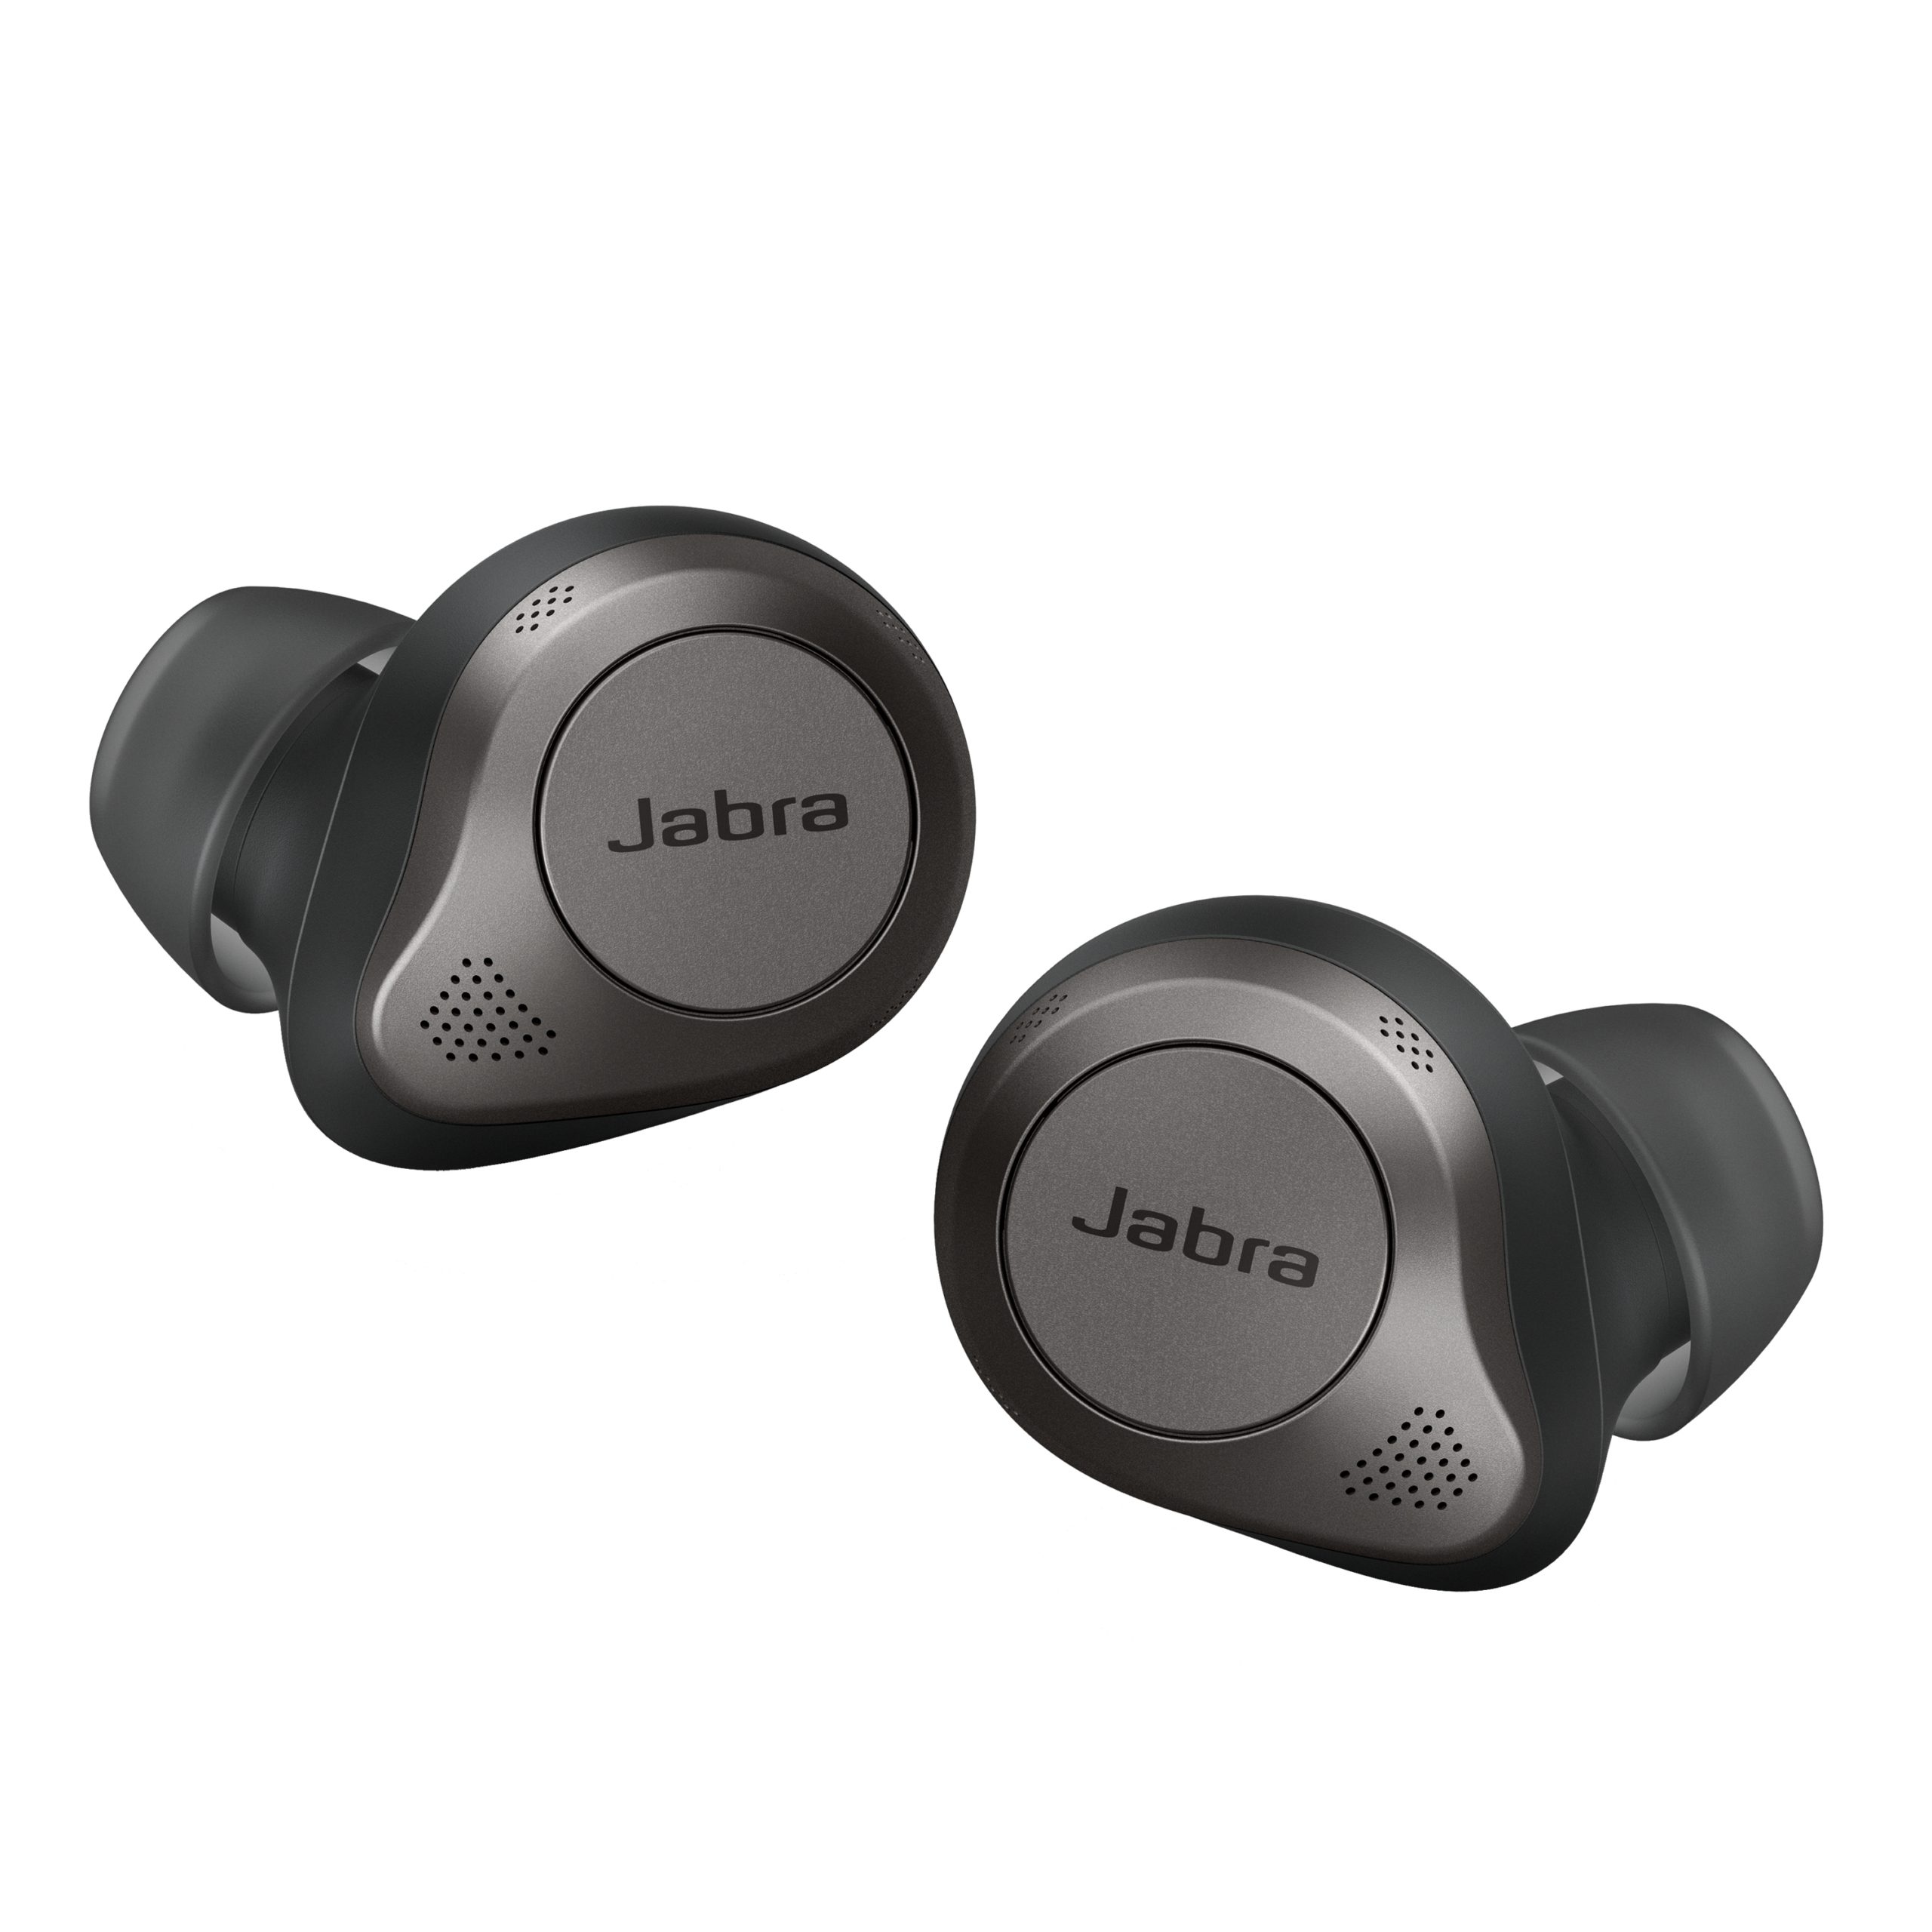 Jabra Elite 85t Review | headphonecheck.com